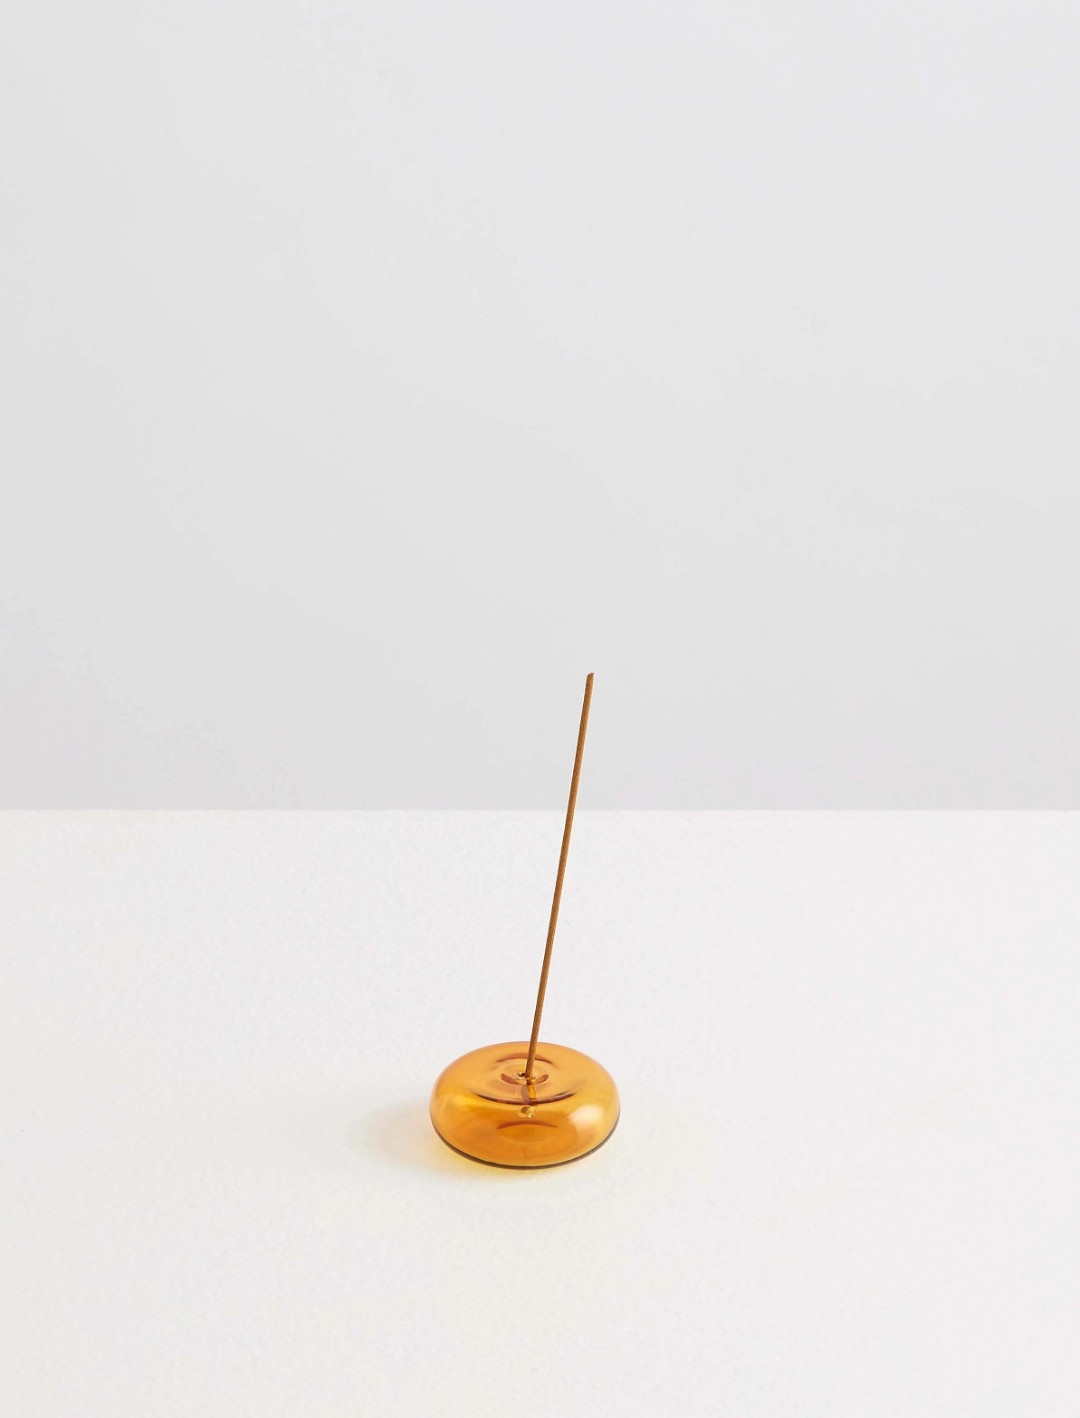 Amber glass pebble incense holder